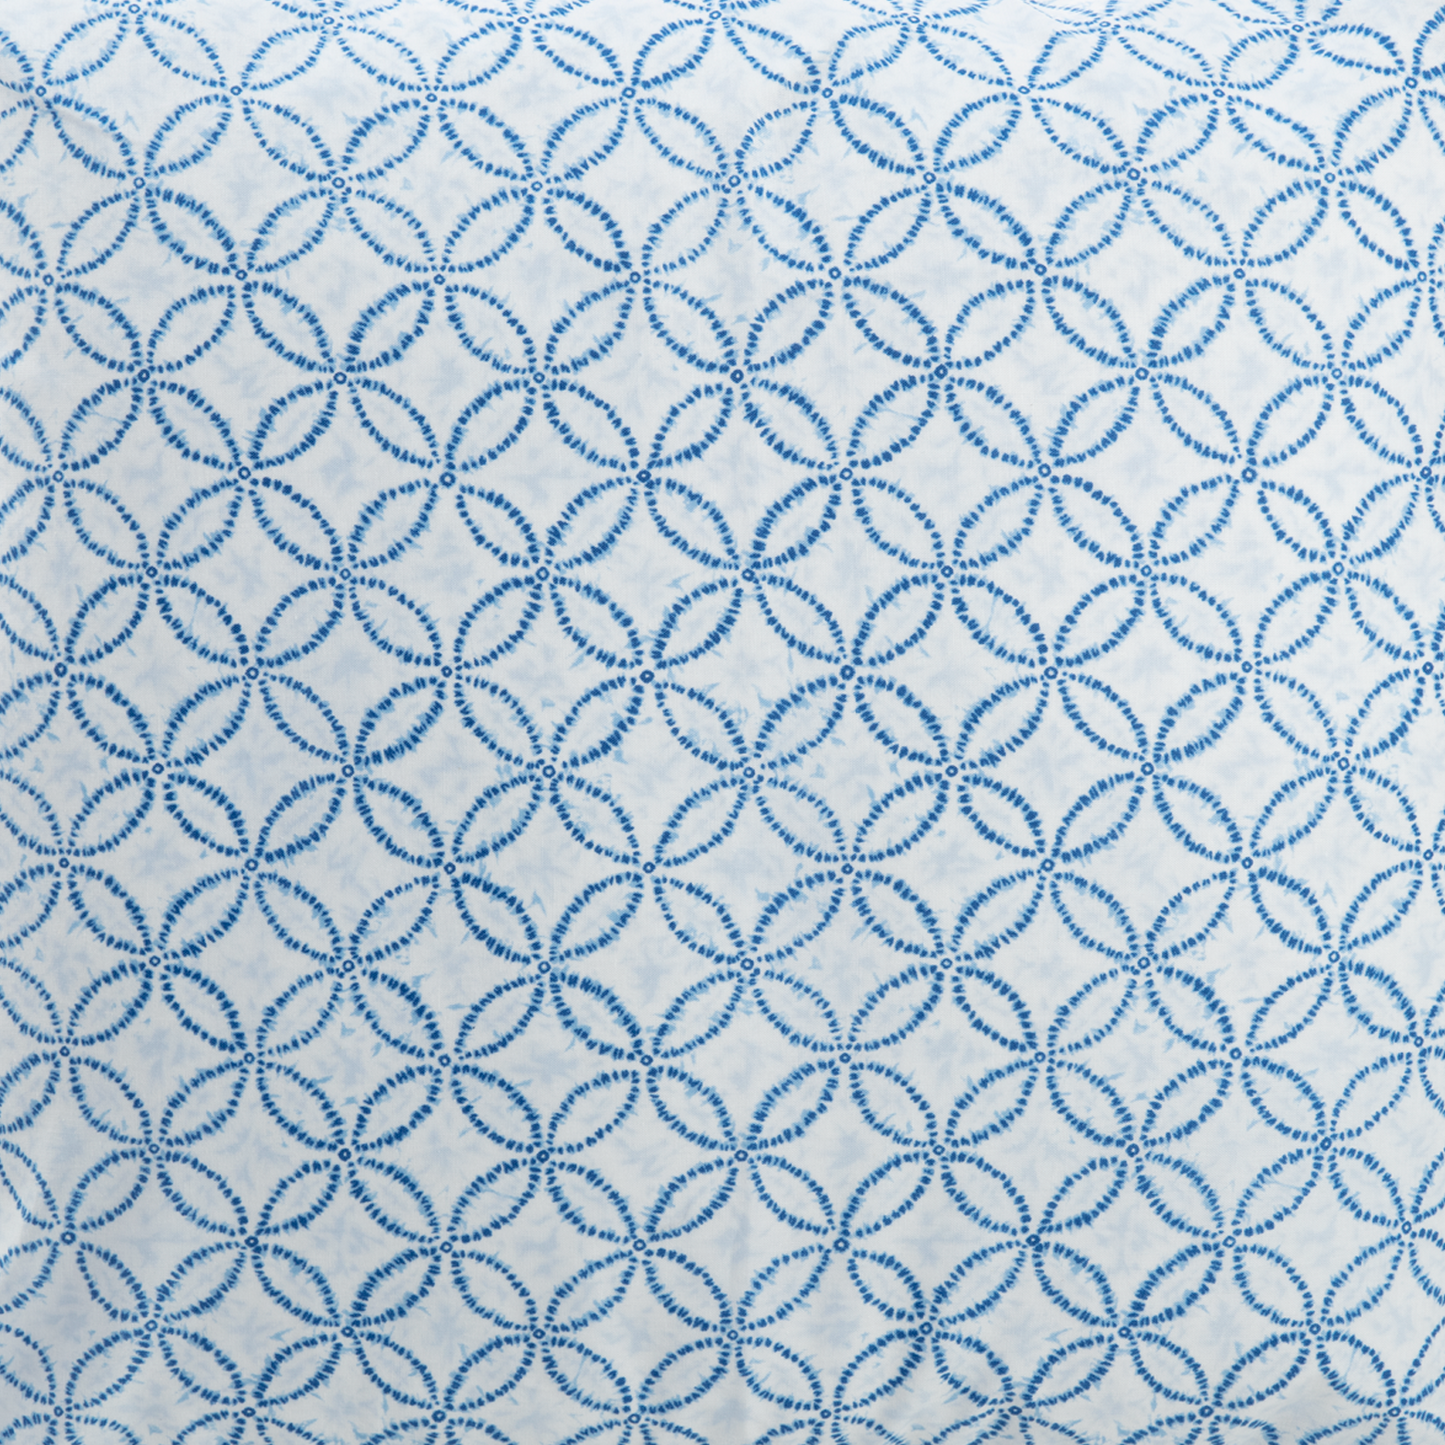 Imported Japanese Fabric - Taidai Light Blue_Fabric_Imported from Japan_100% Cotton_Japanese Sleep System